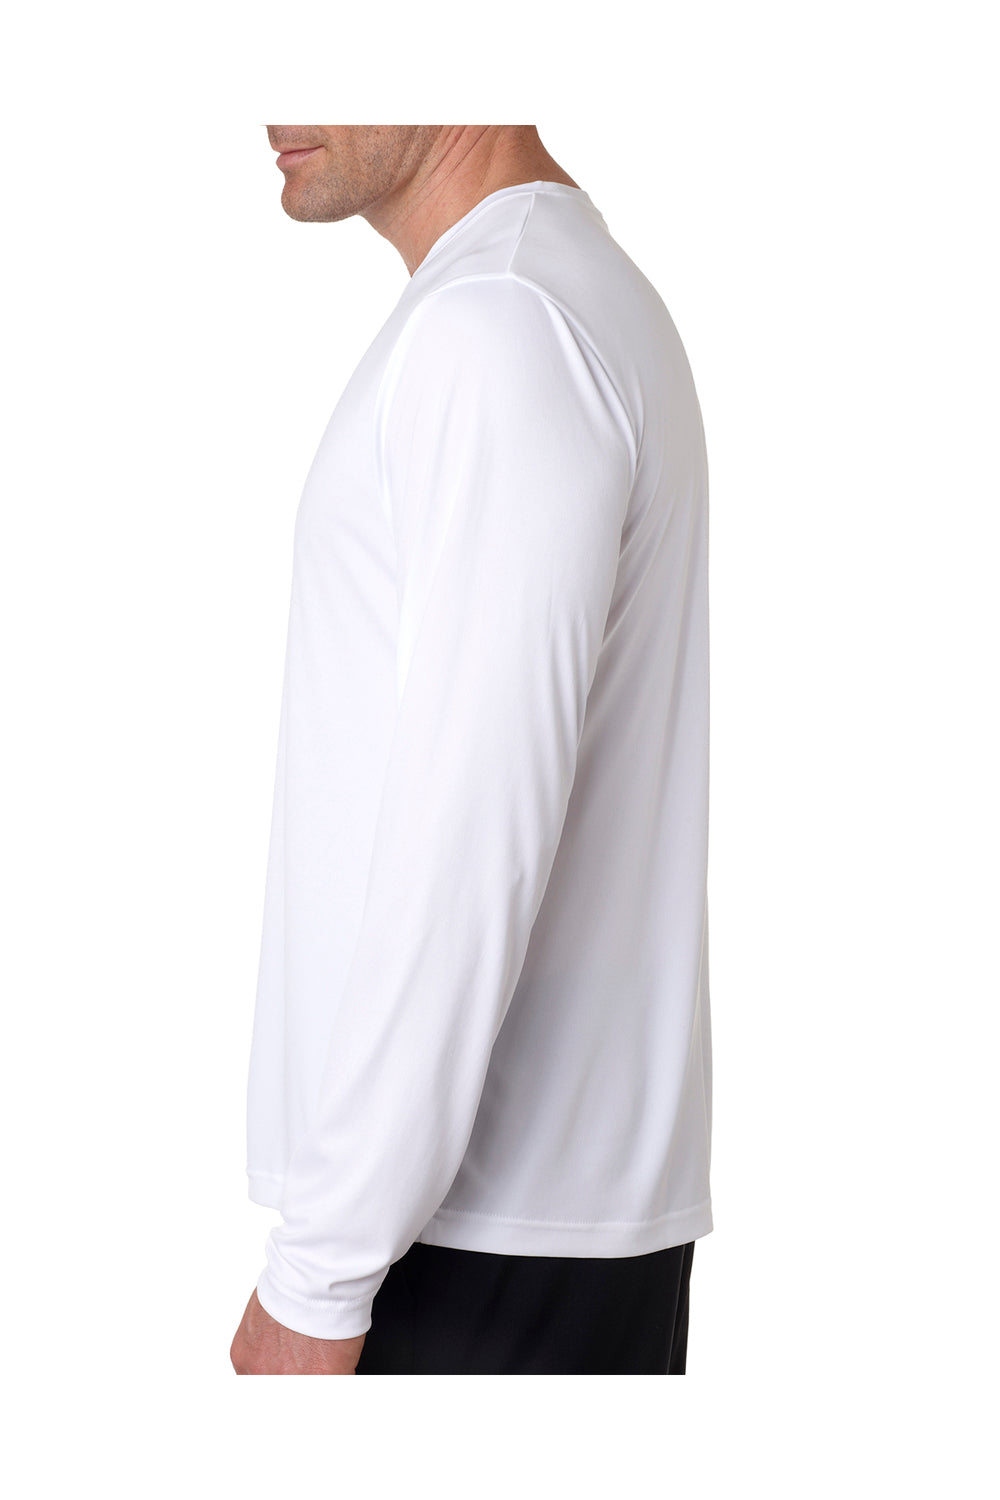 Hanes 482L Mens Cool DRI FreshIQ Moisture Wicking Long Sleeve Crewneck T-Shirt White Side